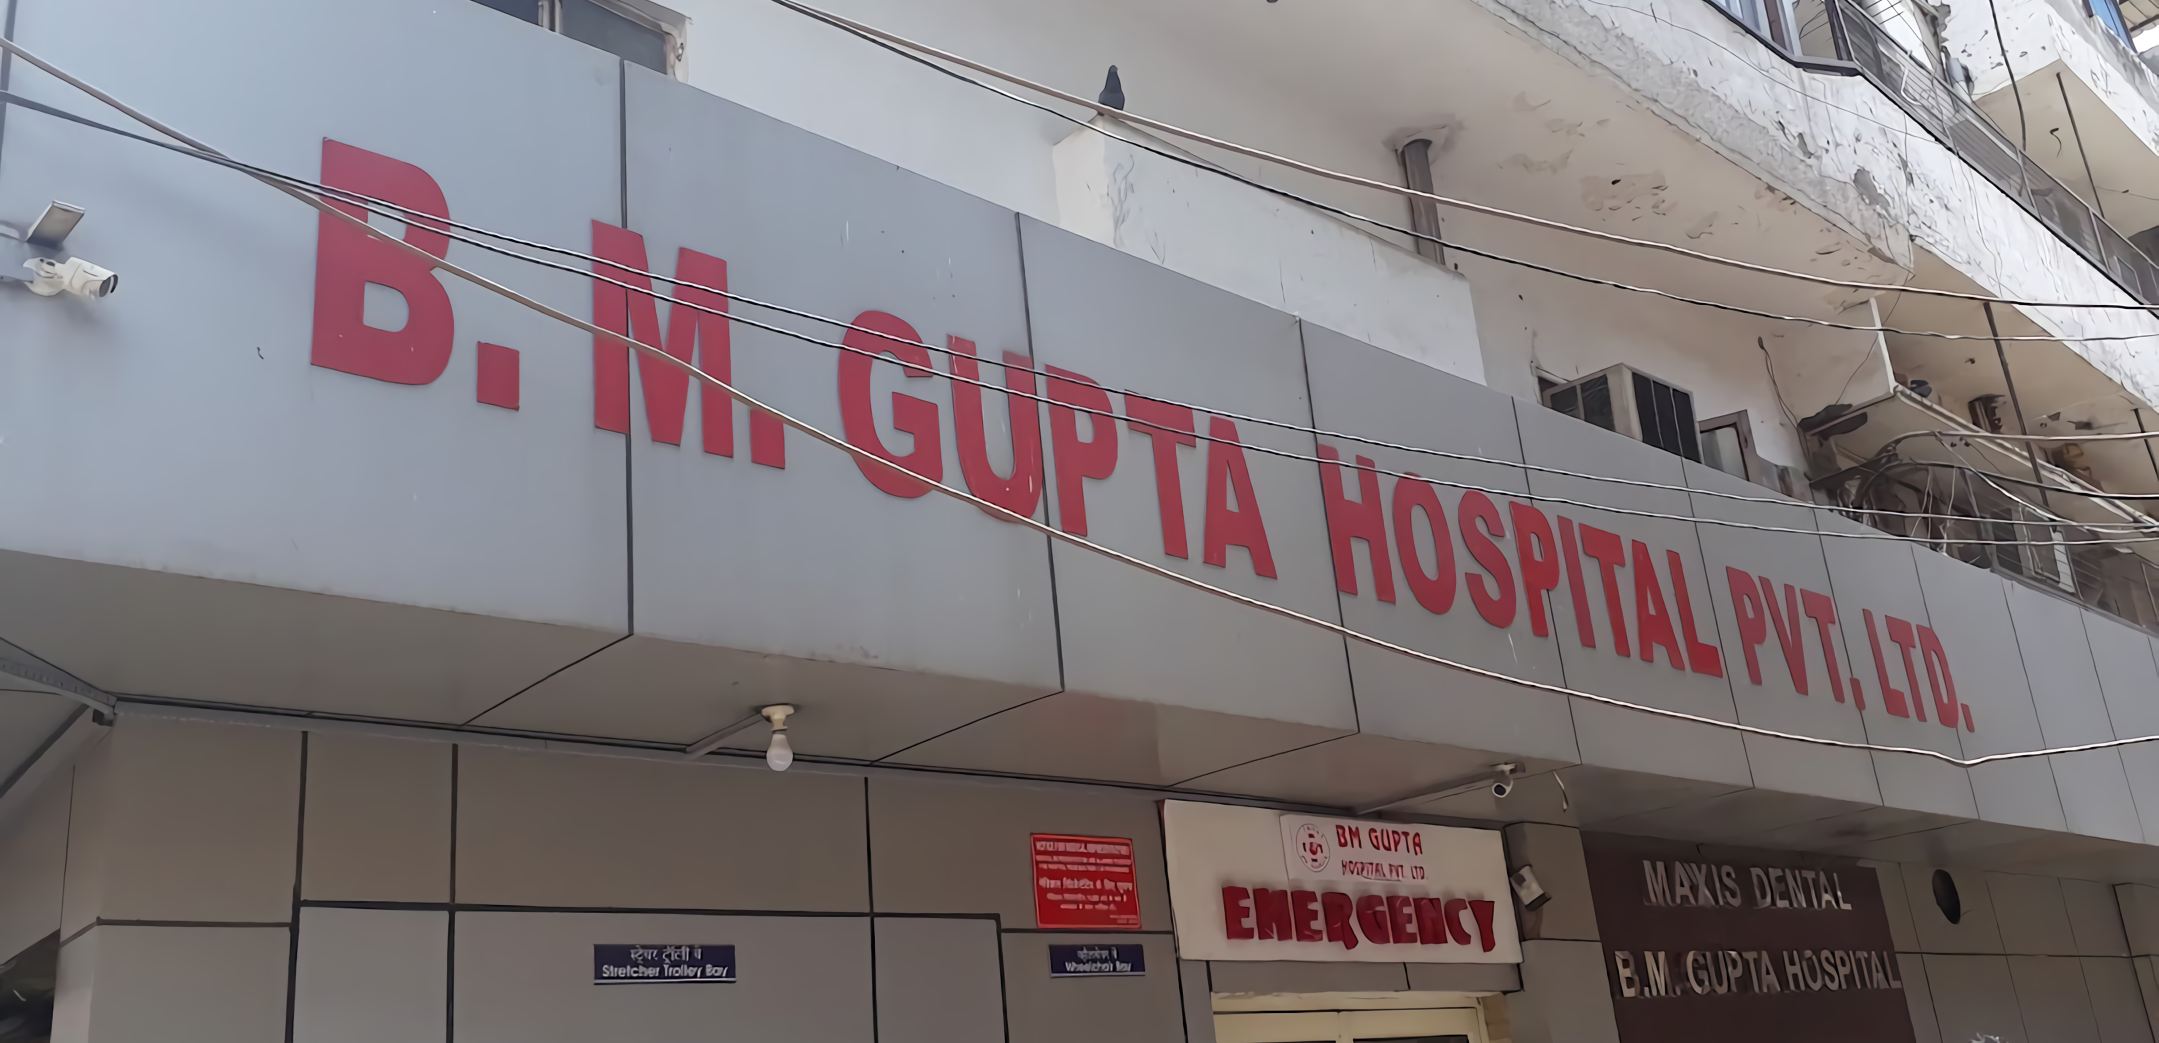 B. M. Gupta Hospital photo